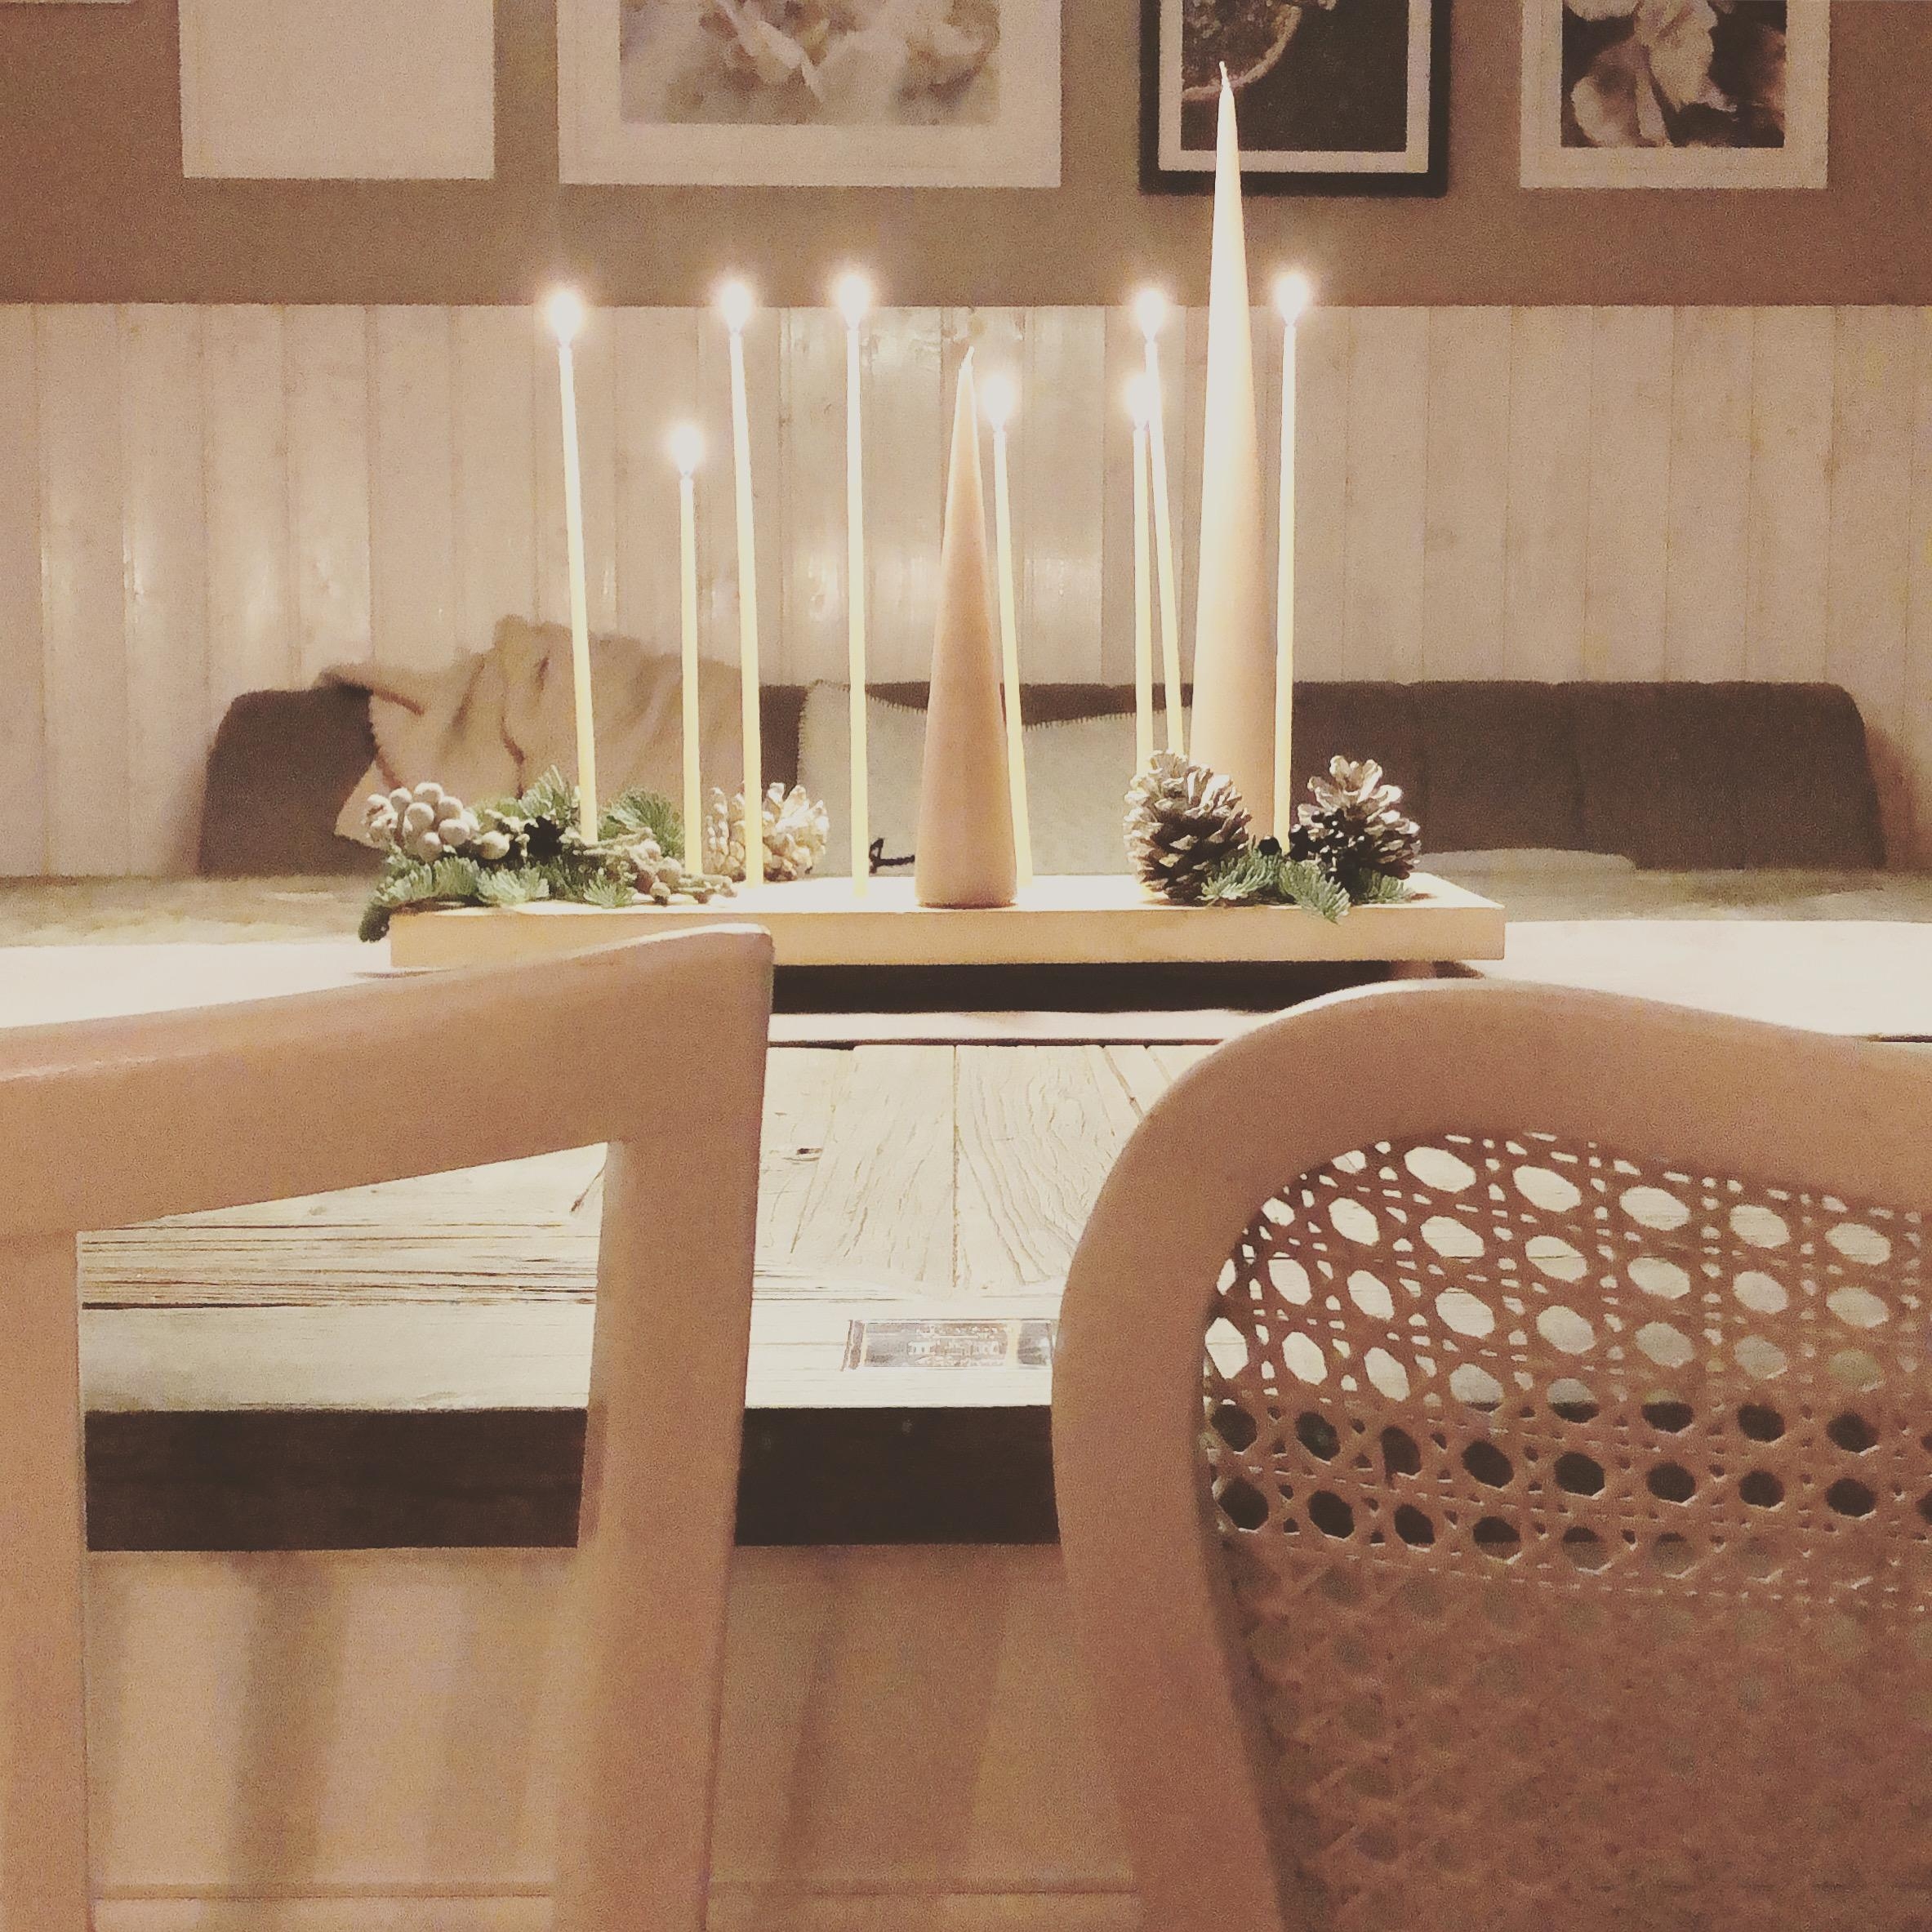 Kerzen zaubern einfach das schönste Licht.
#kerzen#kerzenschein#kerzenbrett